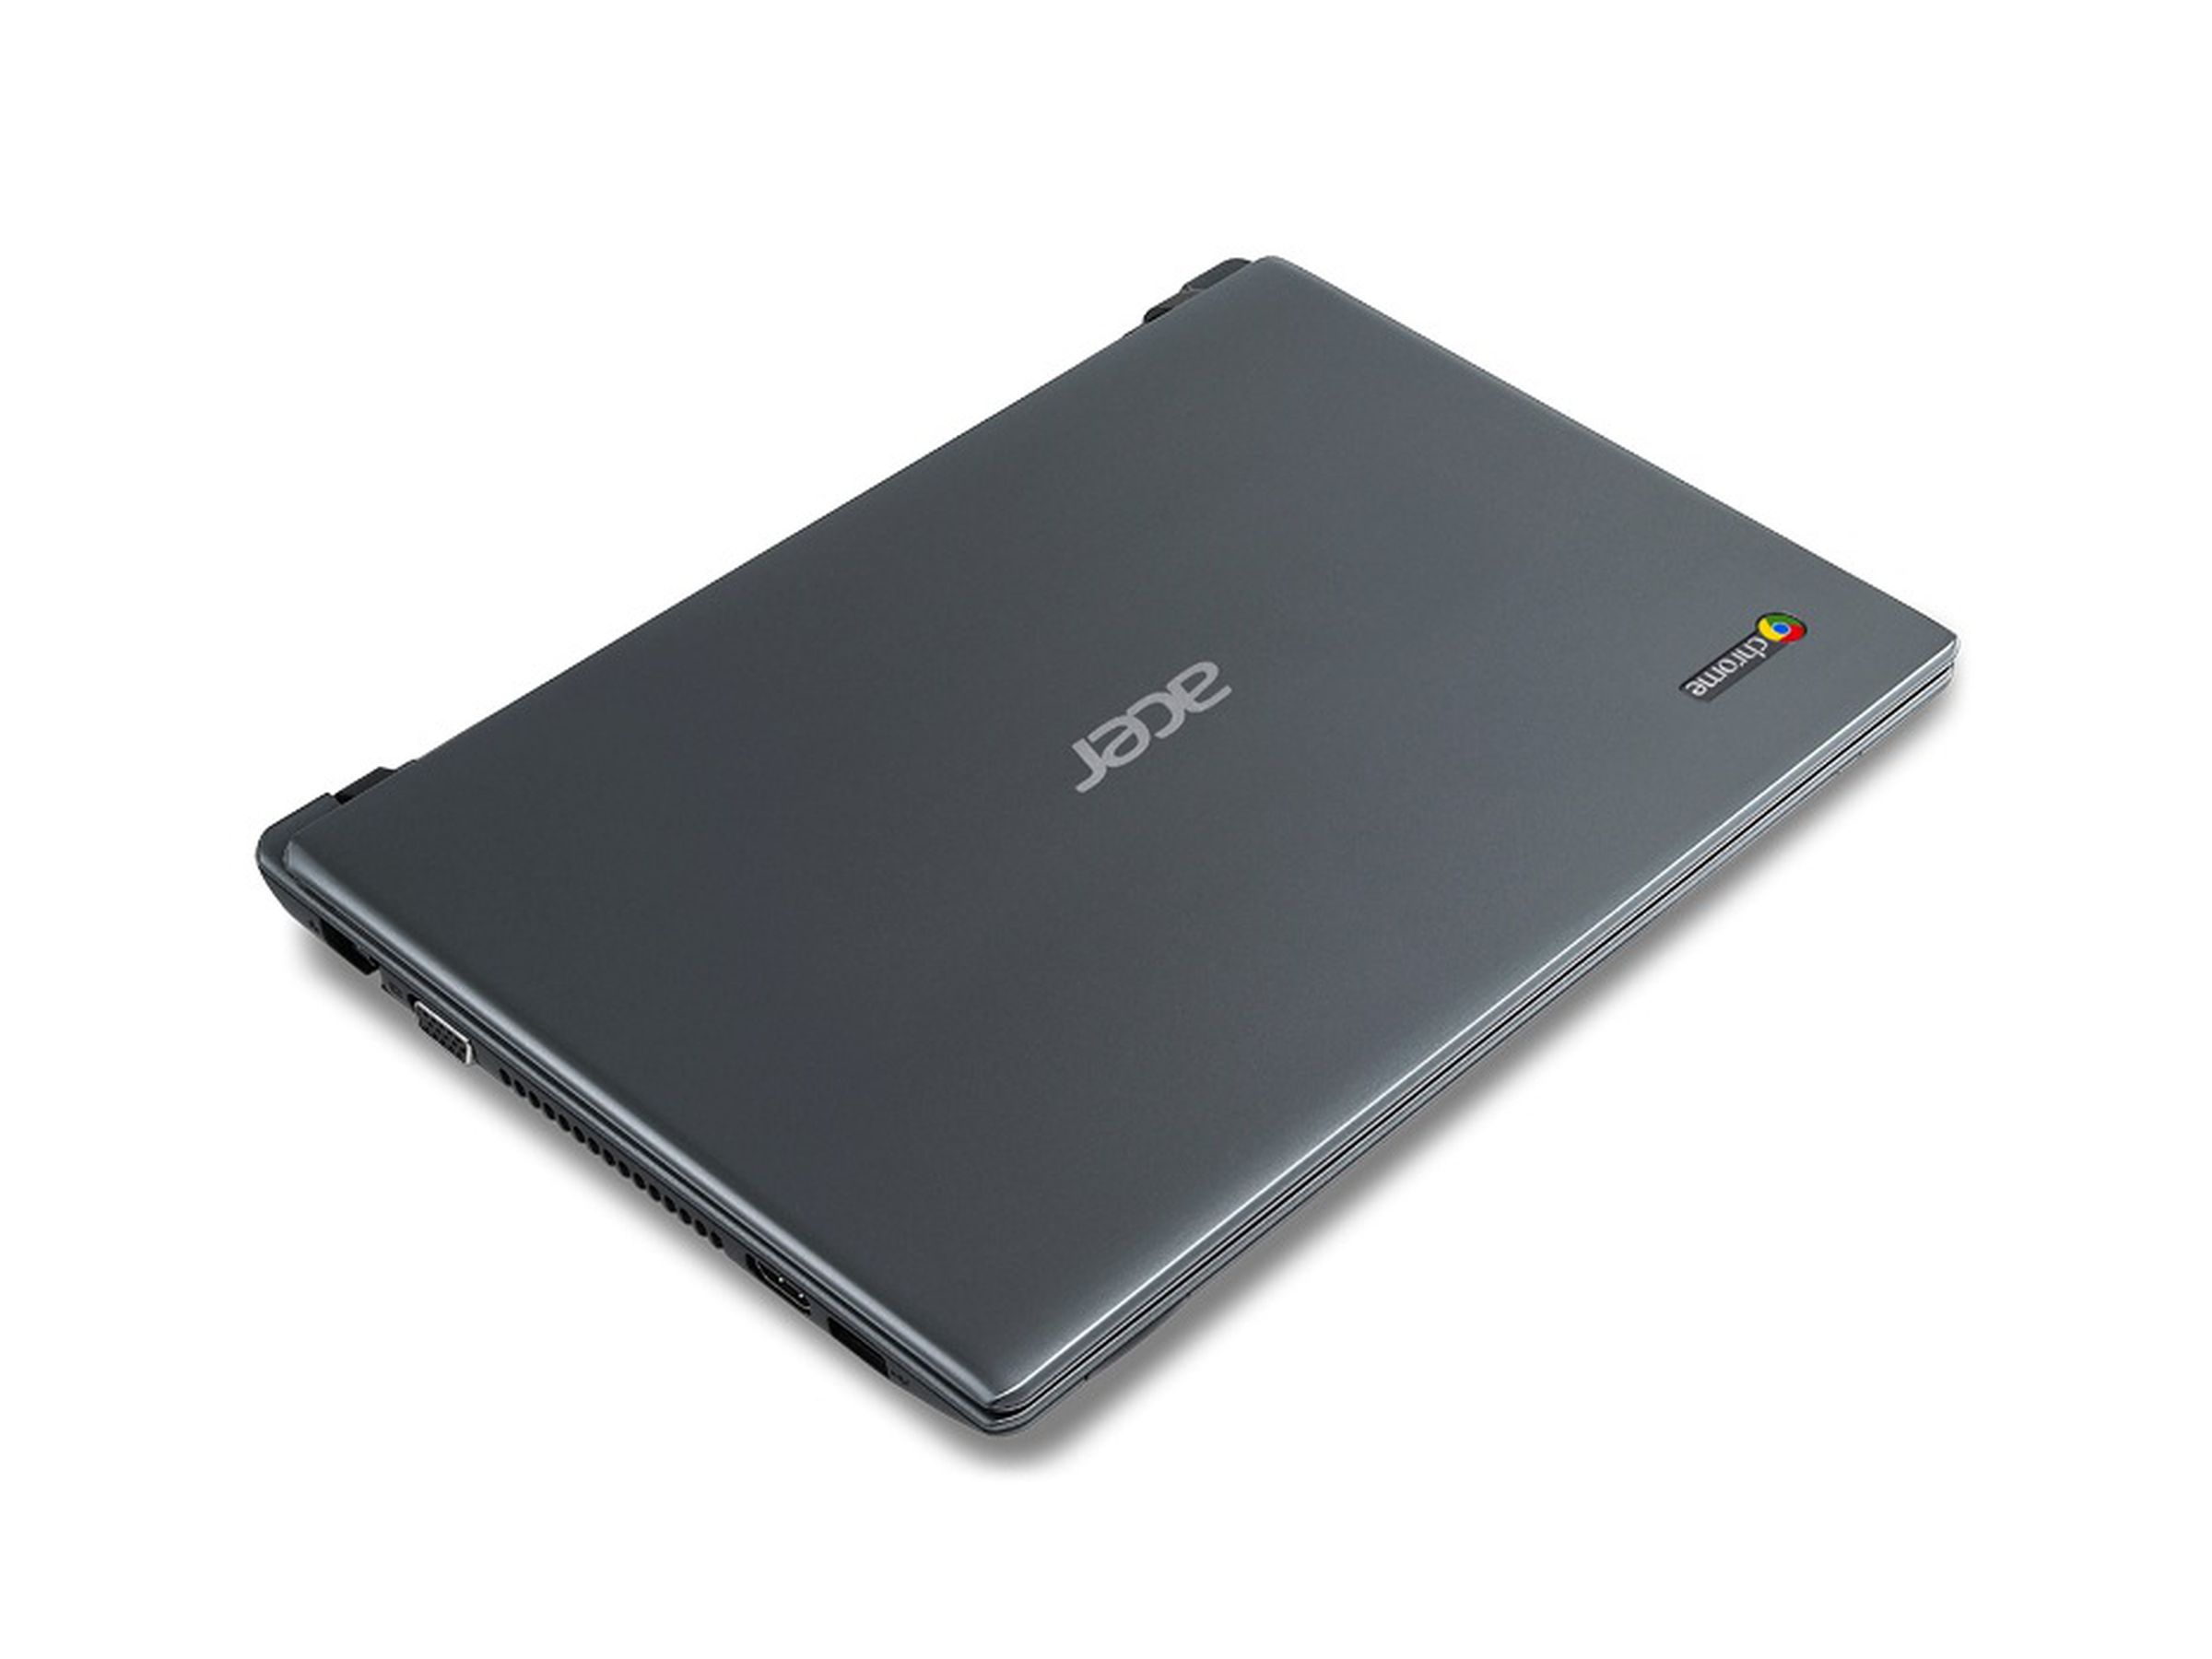 Acer C7 Chromebook images